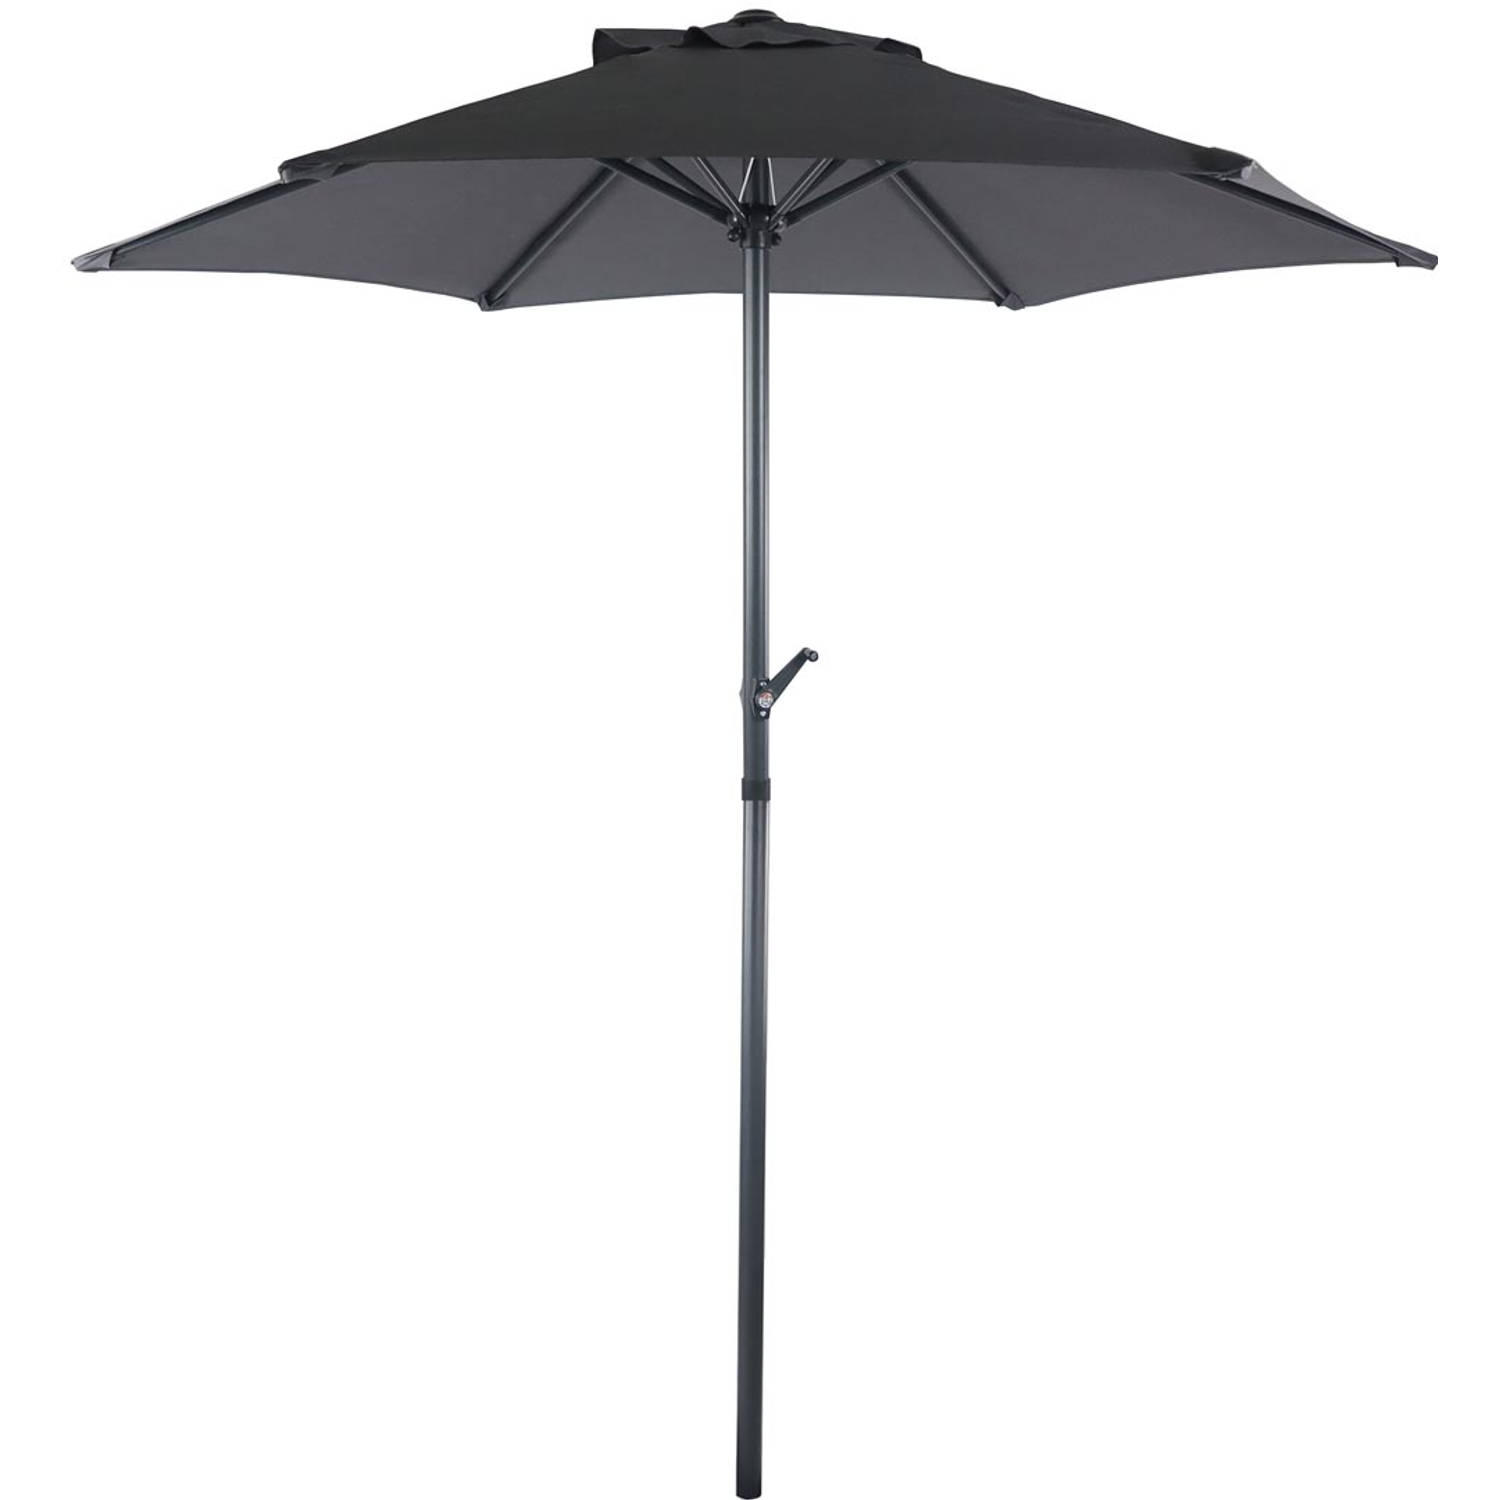 Vera parasol Ø180cm antraciet.